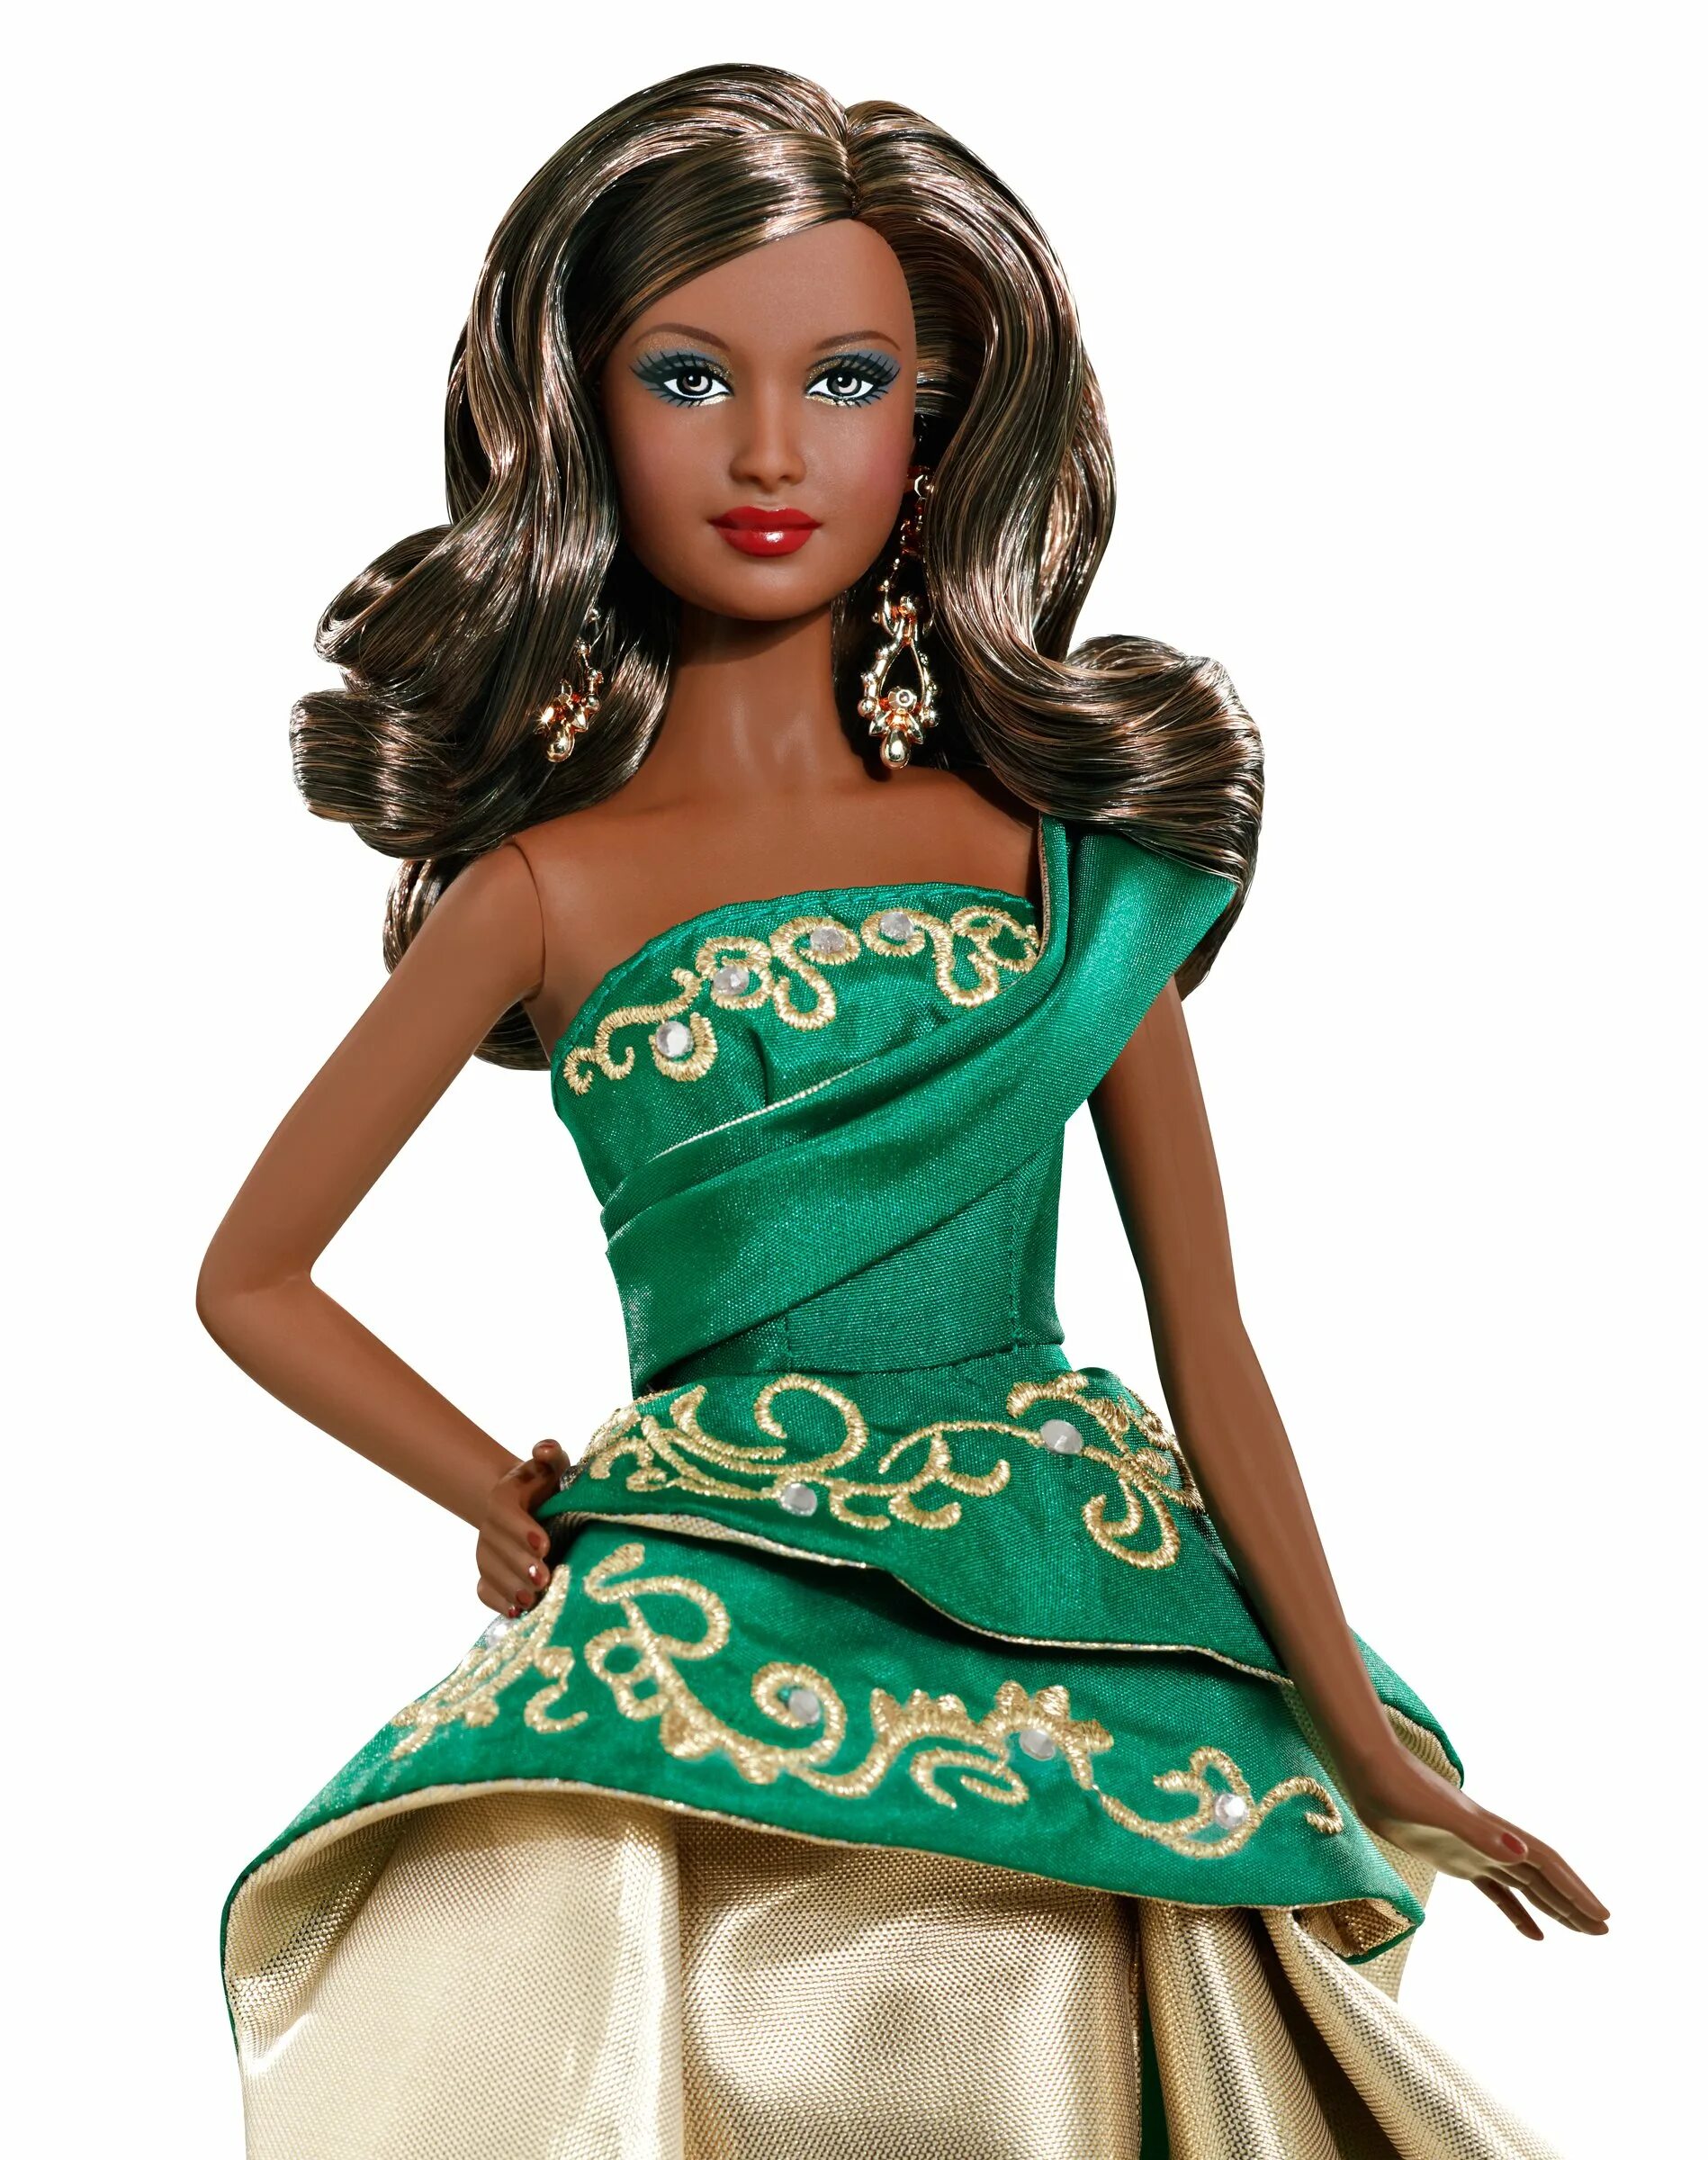 Barbie collections. Кукла Барби Холидей. Барби Холидей 2011. Барби коллекционные куклы Холидей. Барби Холидей 2009.